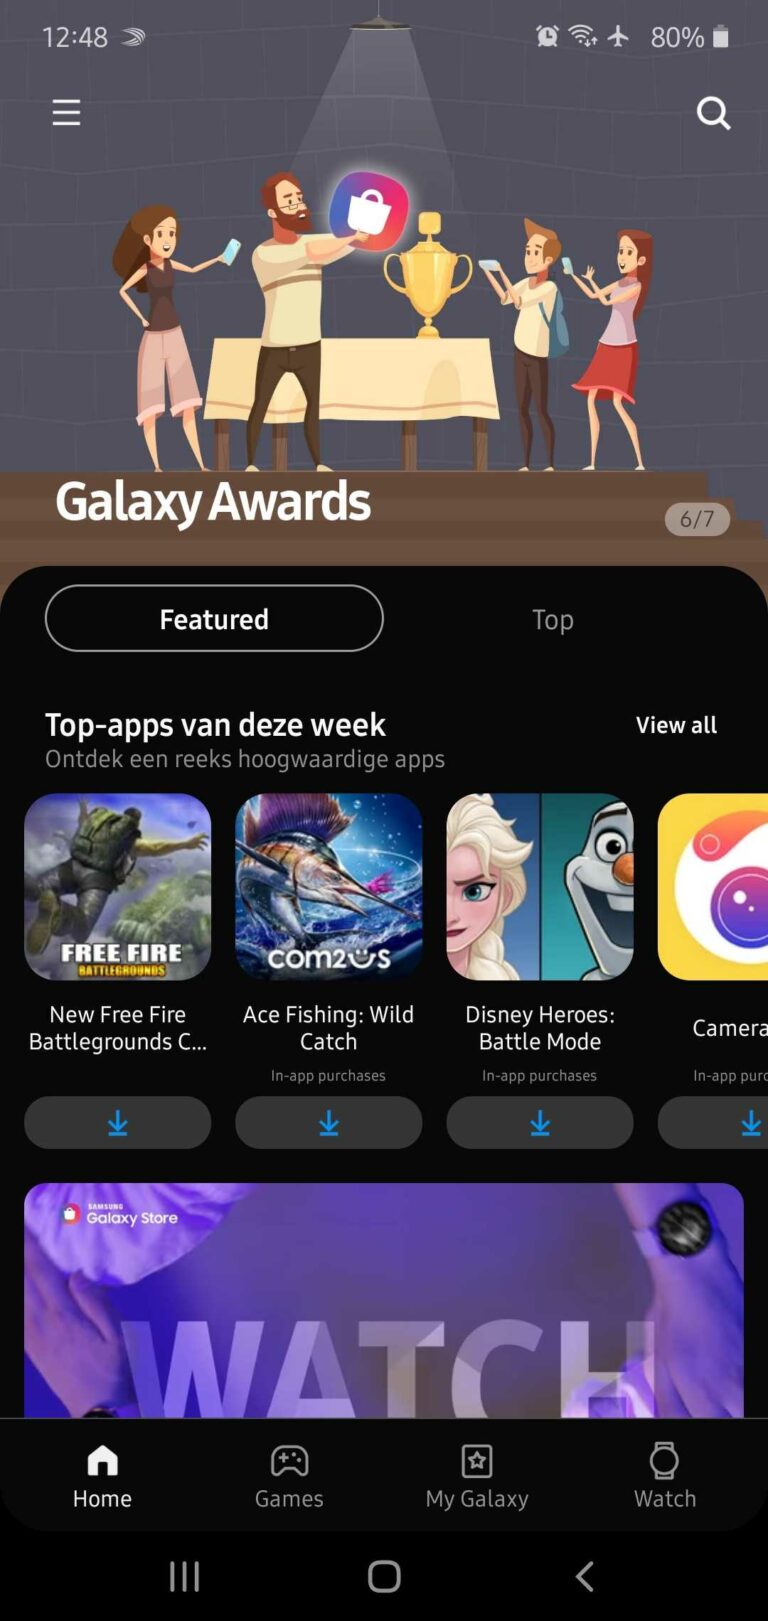 Galaxy Store update brings dark mode and One UI design - SamMobile